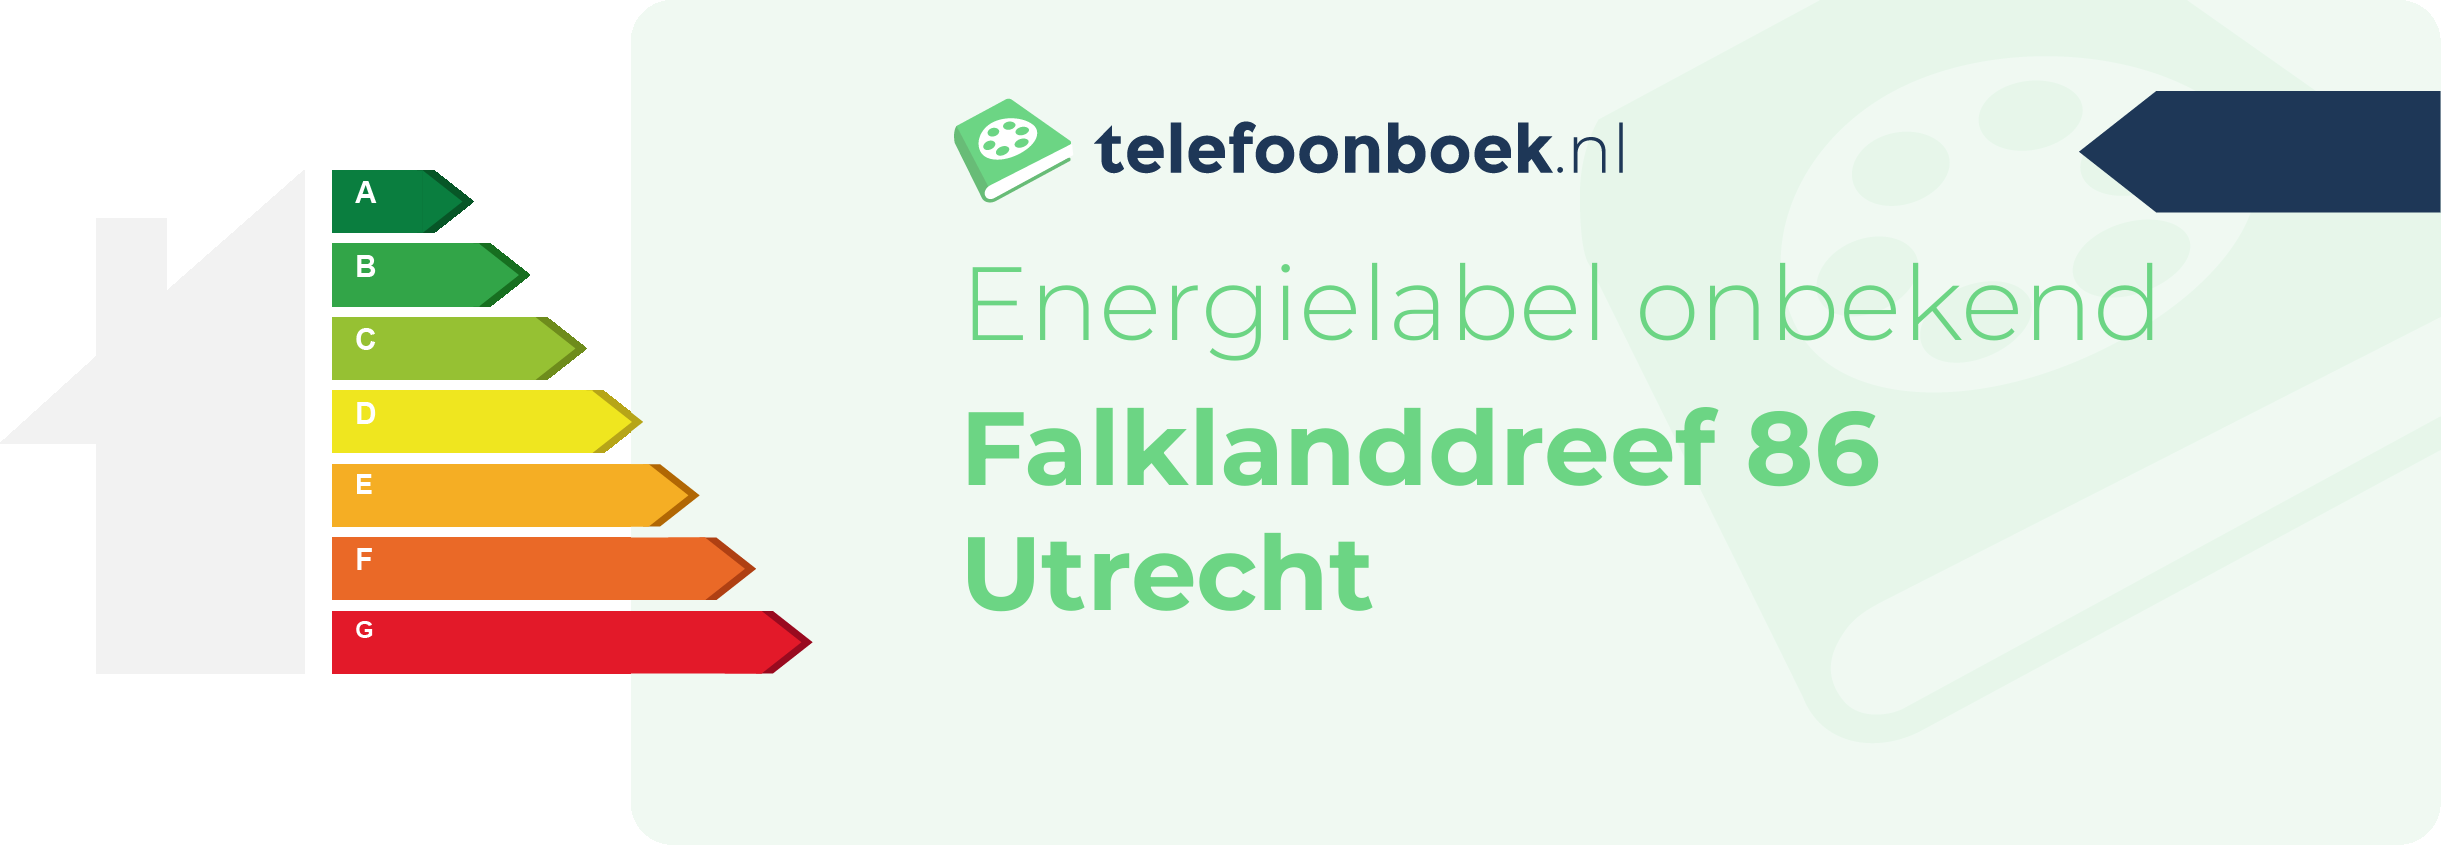 Energielabel Falklanddreef 86 Utrecht